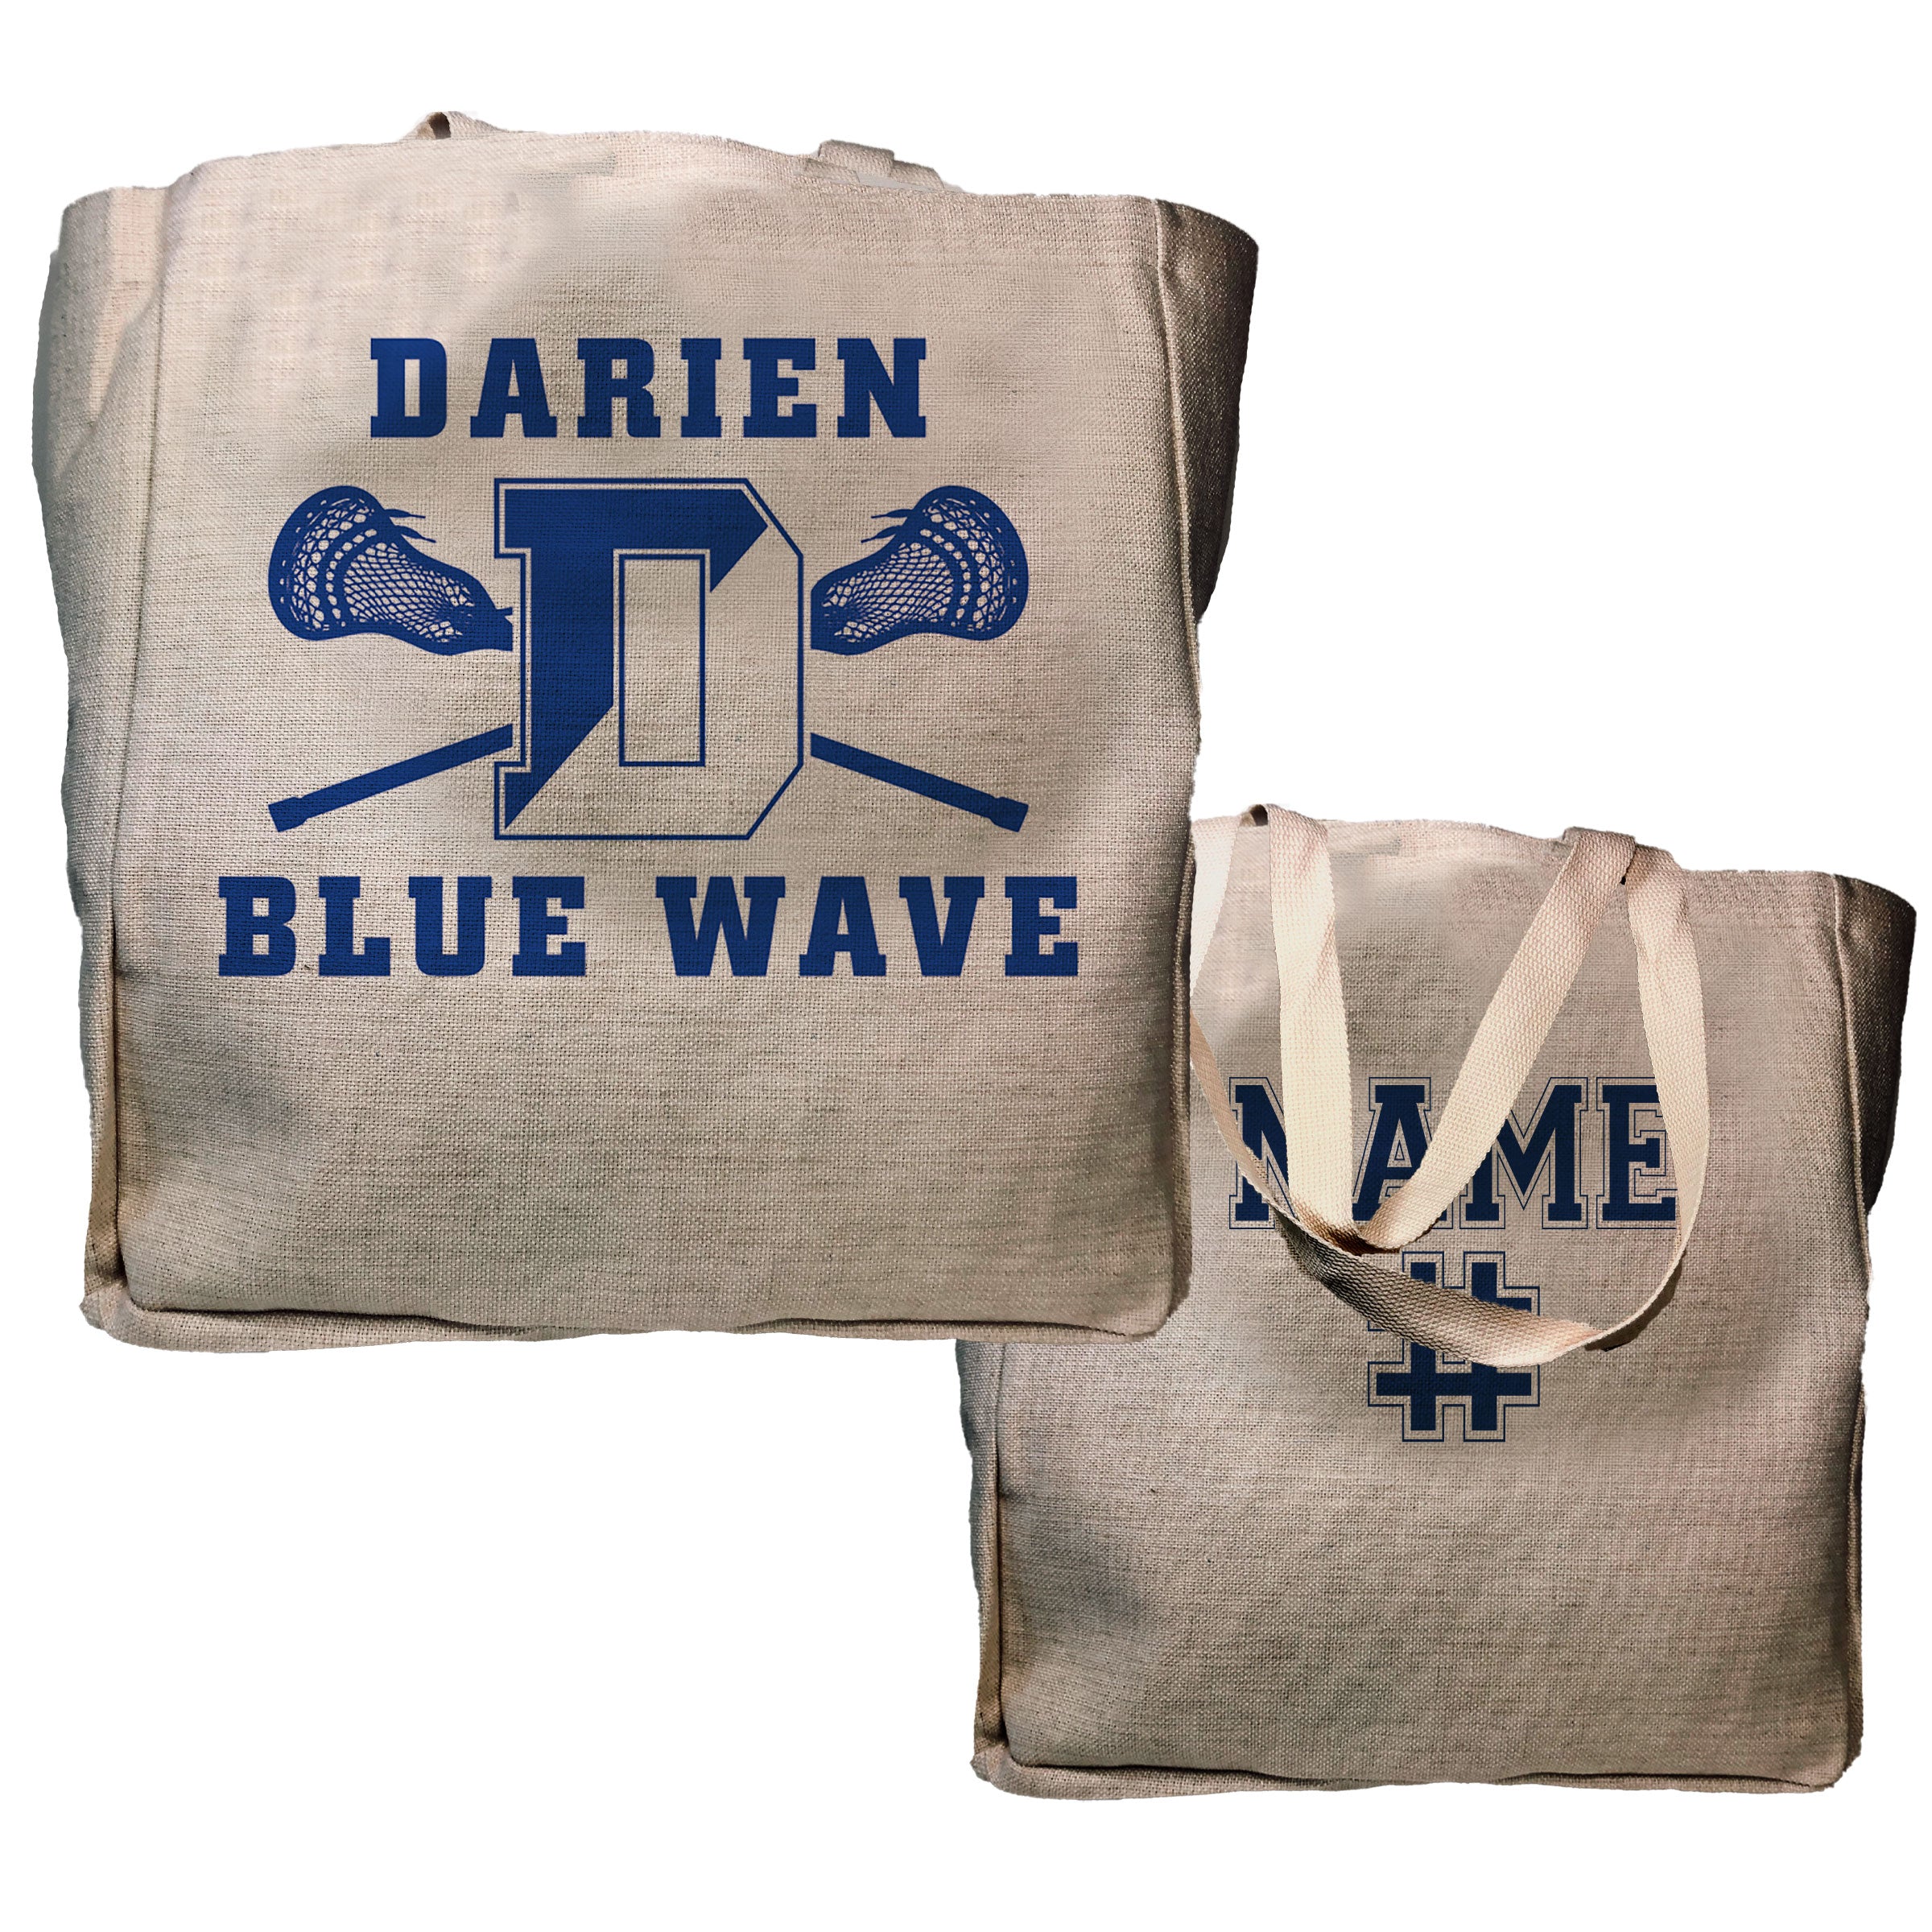 Blue Wave Lacrosse Tote Bag - Name & Number